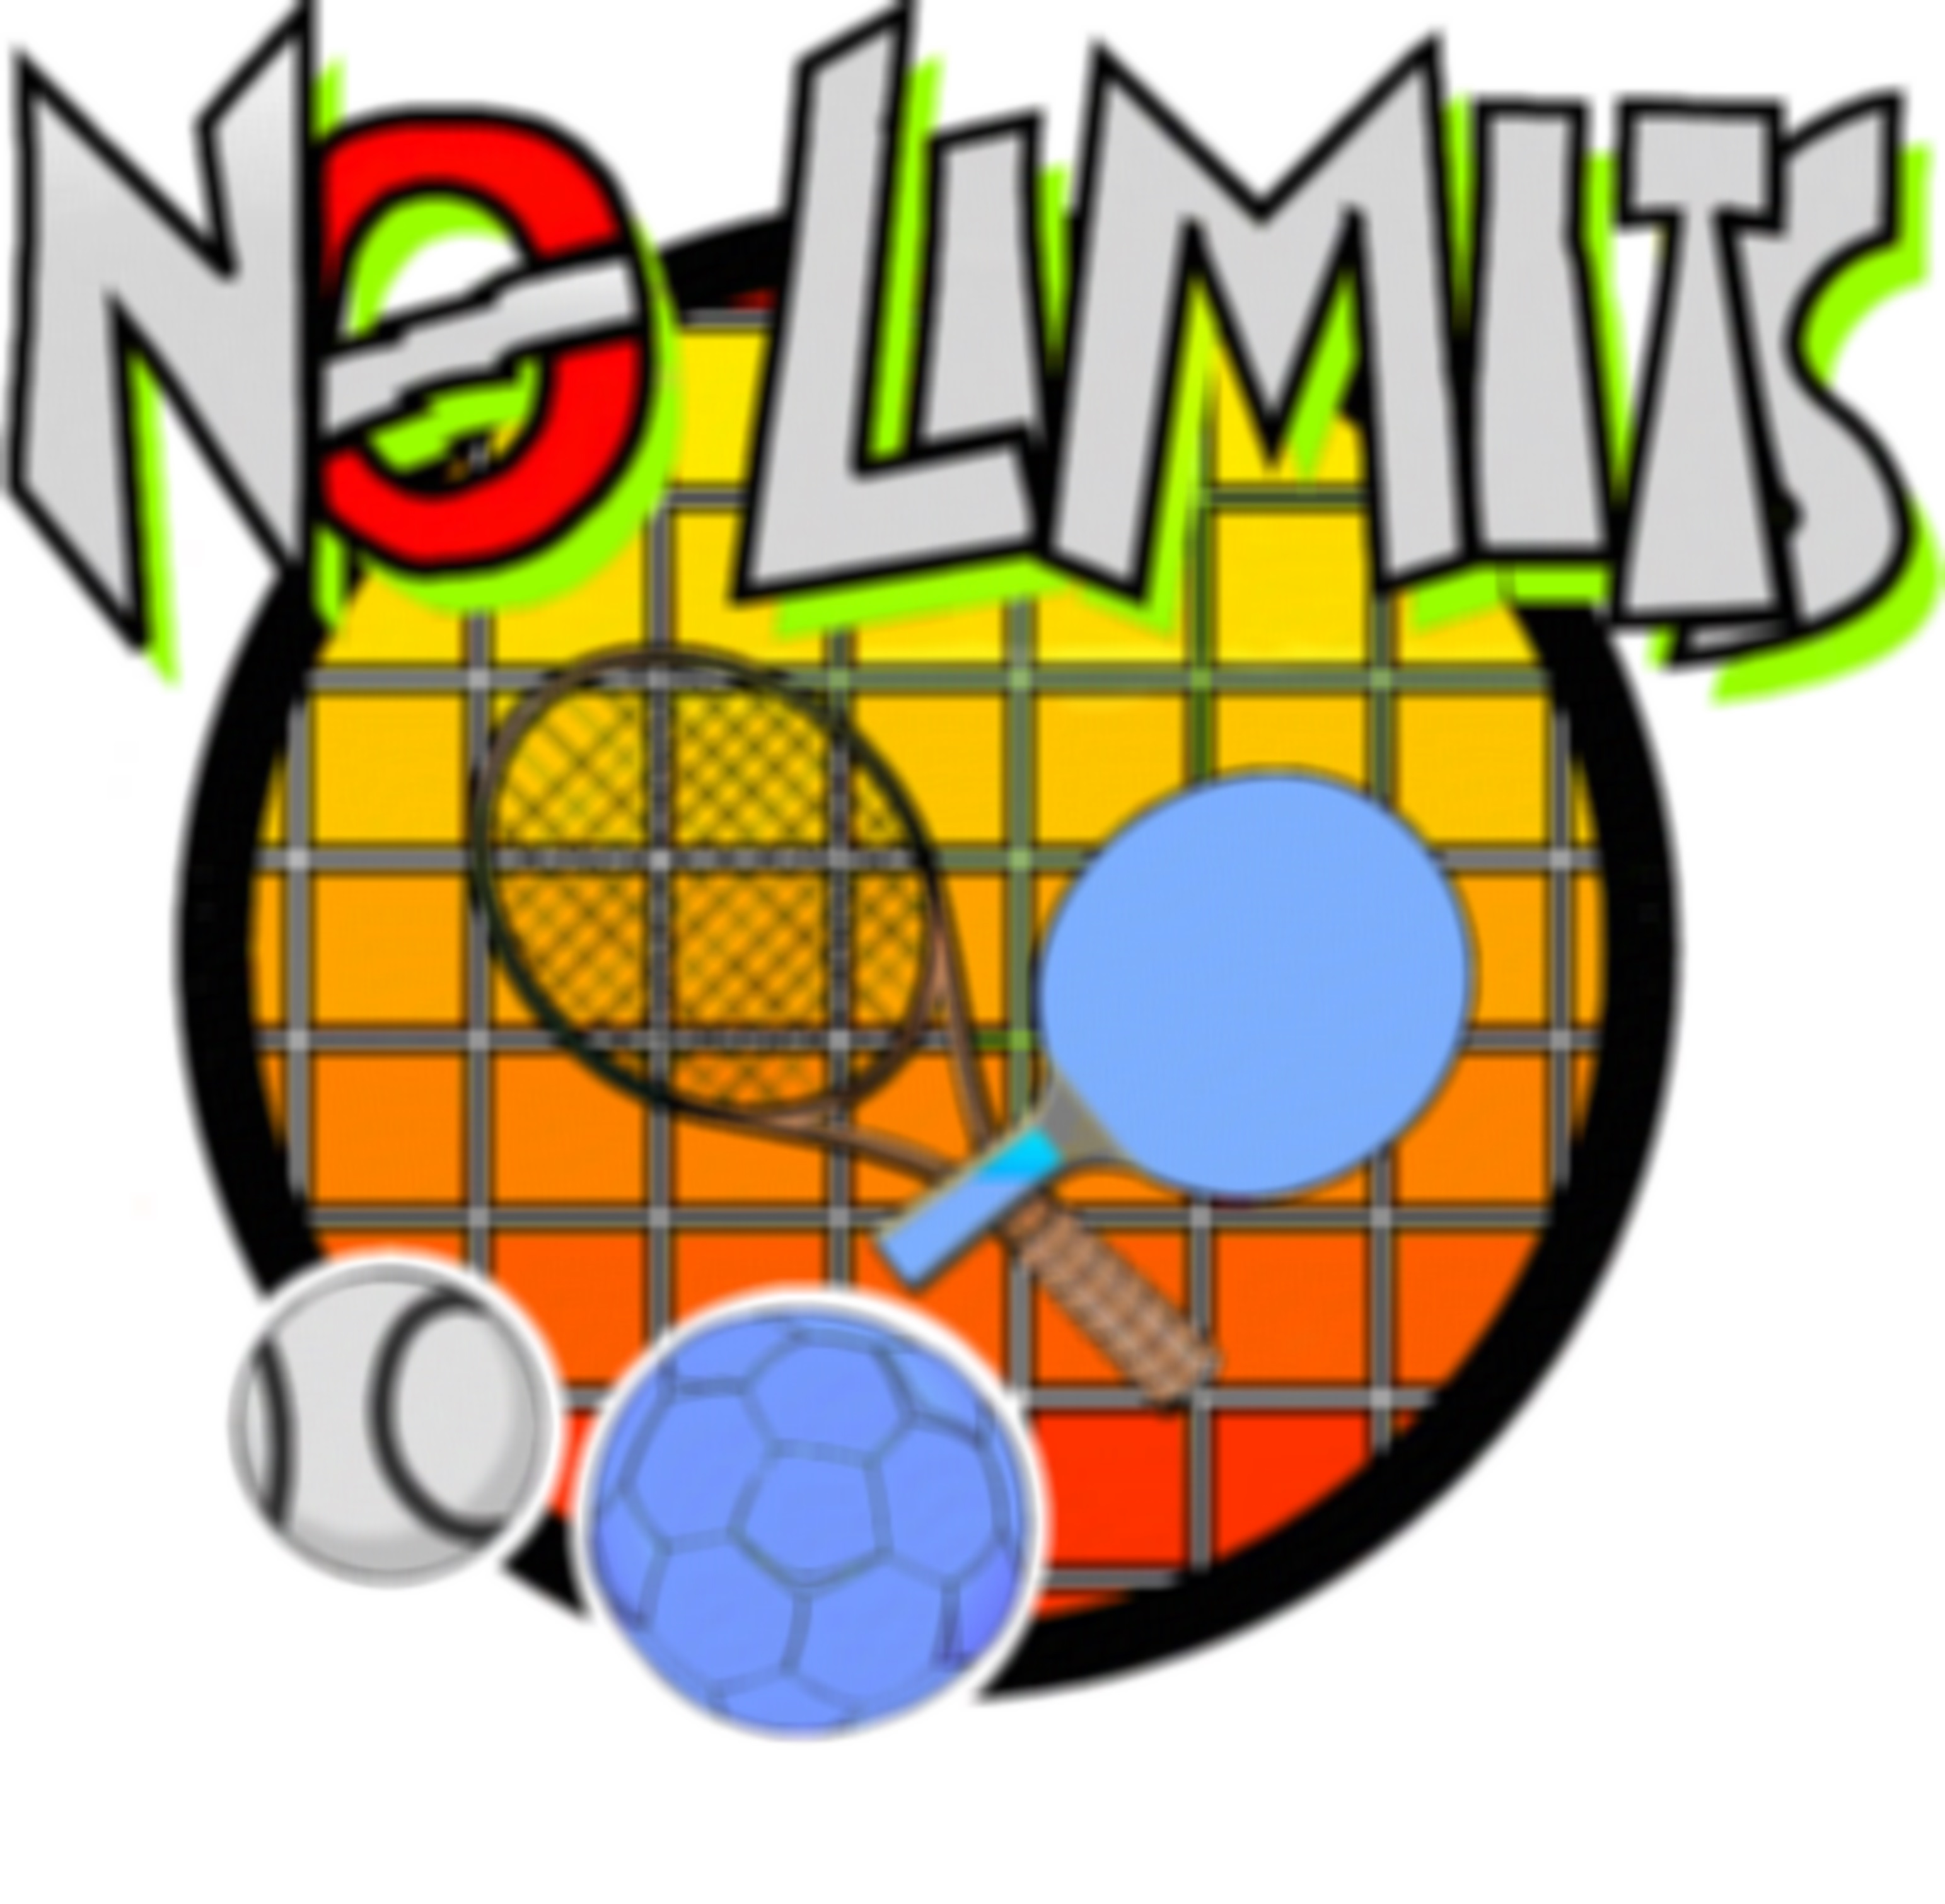 No Limits multi-sports club logo